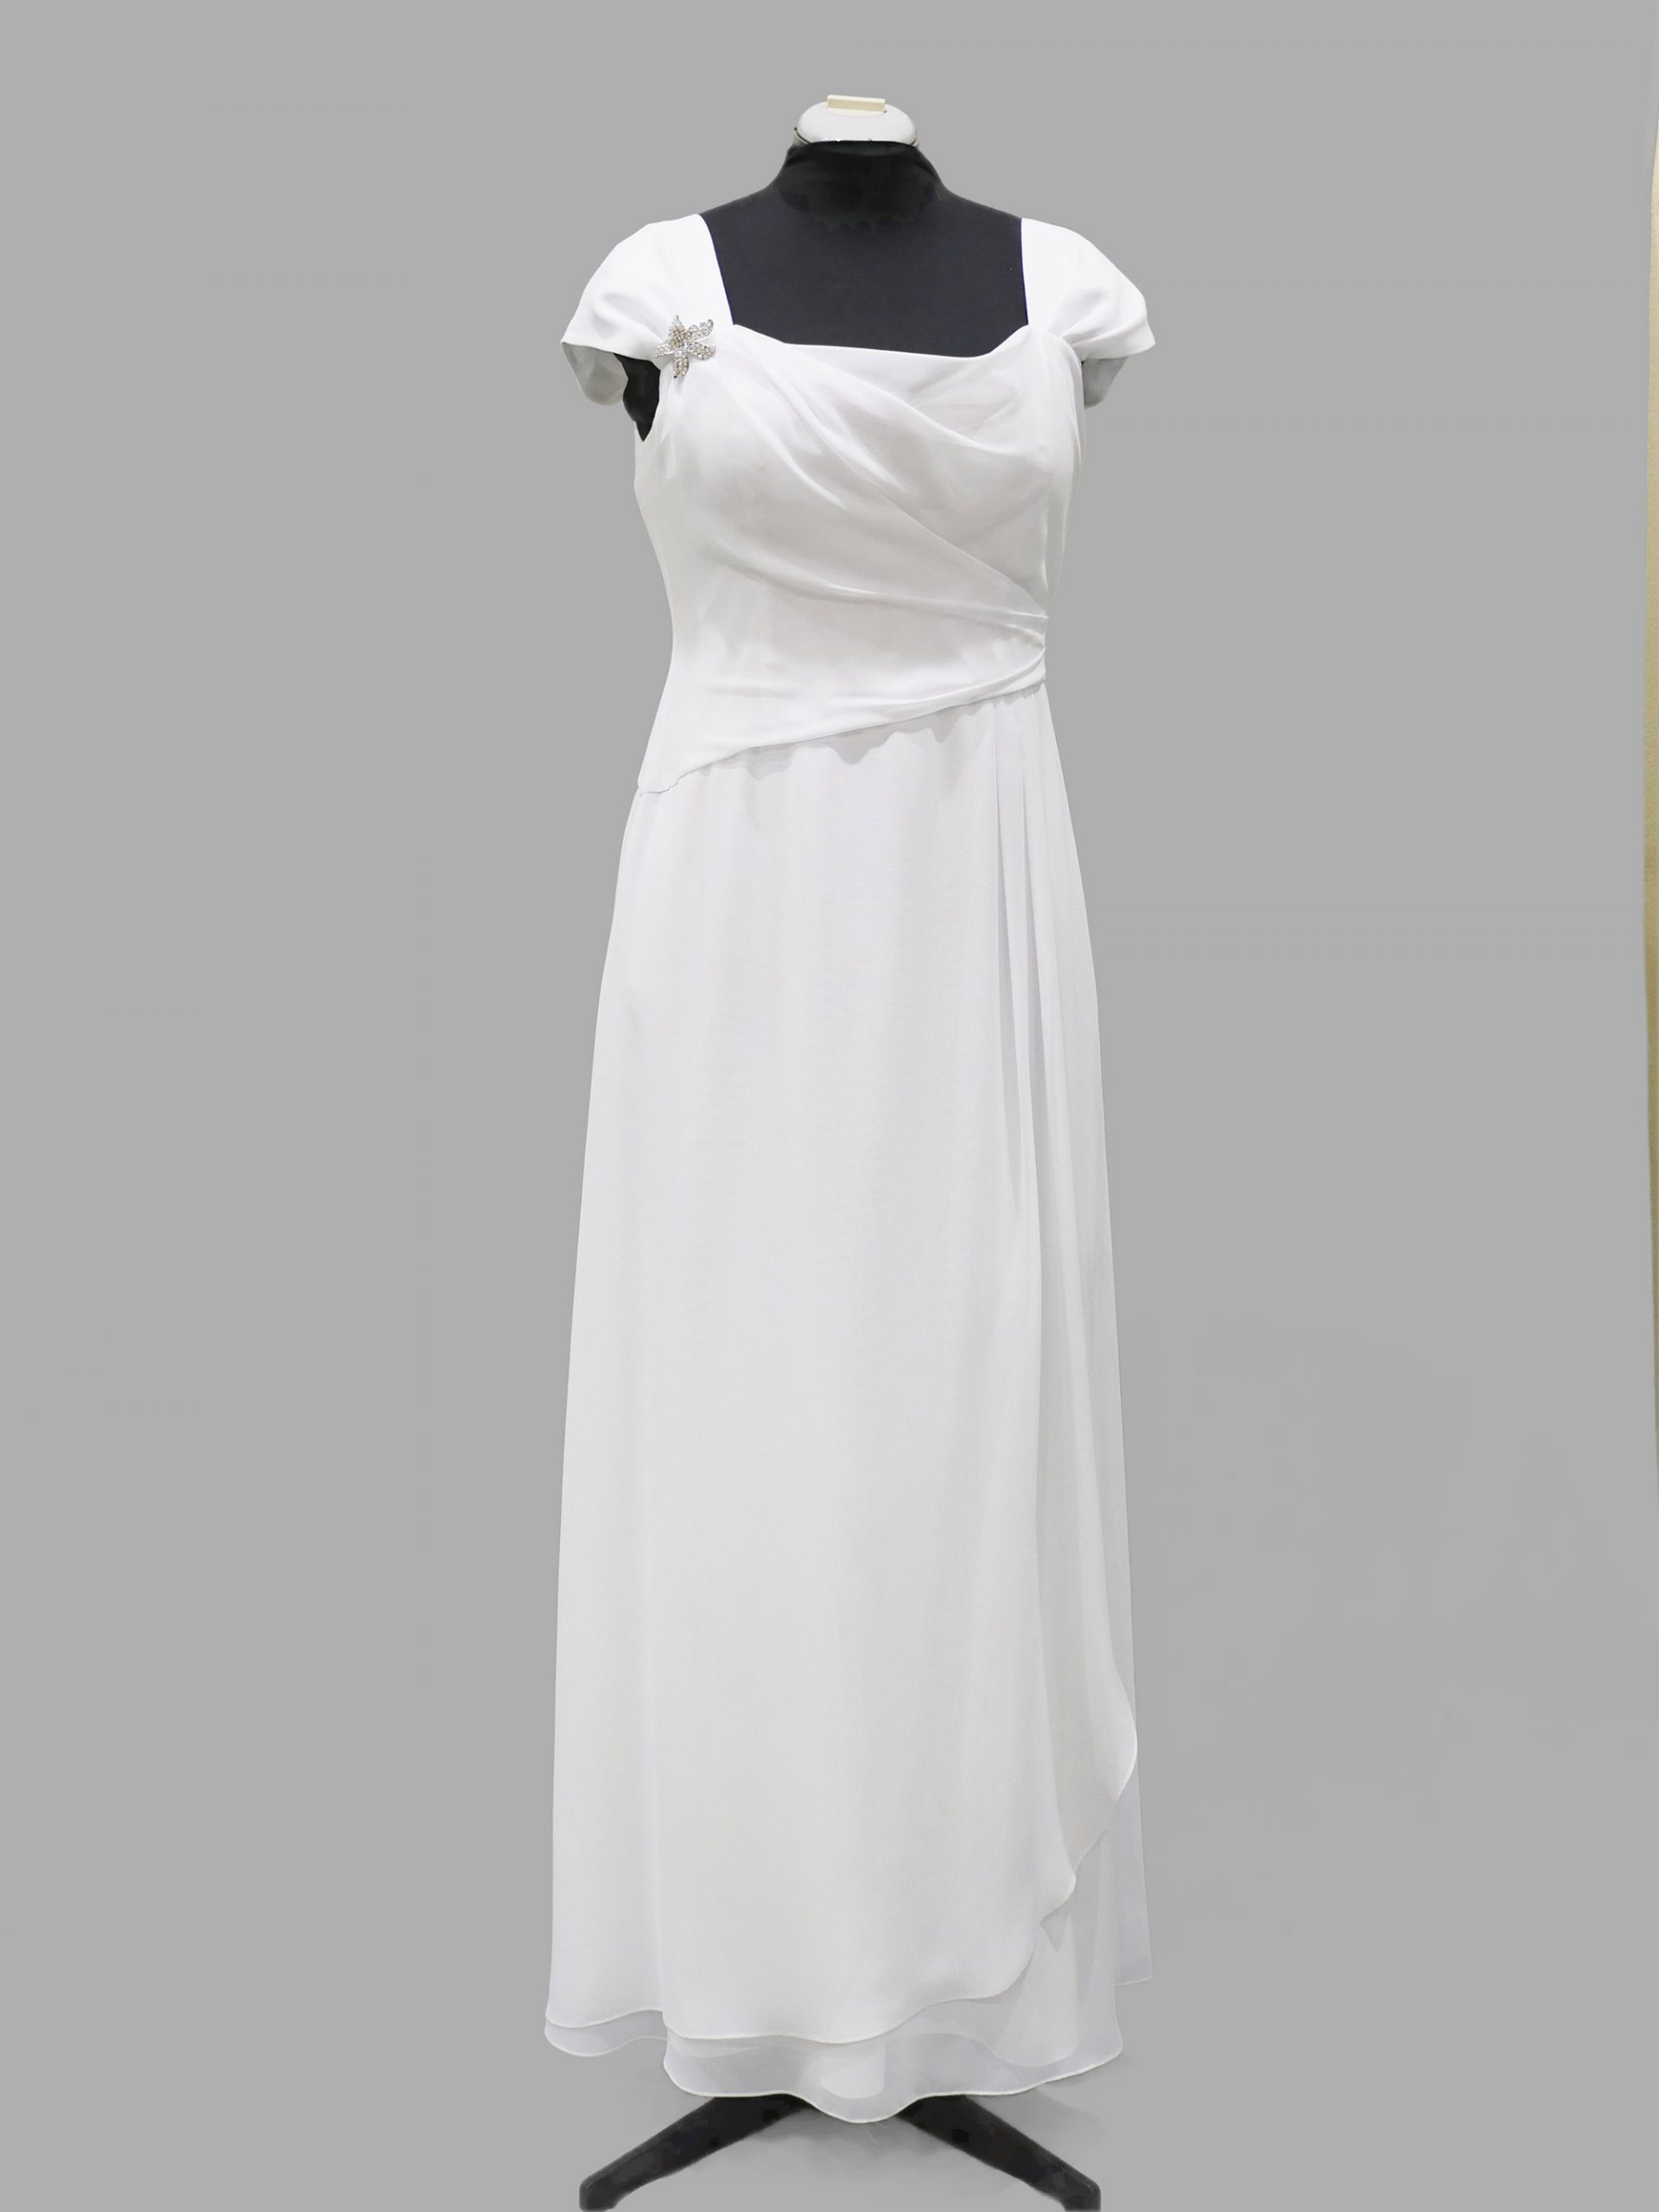 Simple Bridal or Debutante Gown, Mr K, KB5004, Size 14